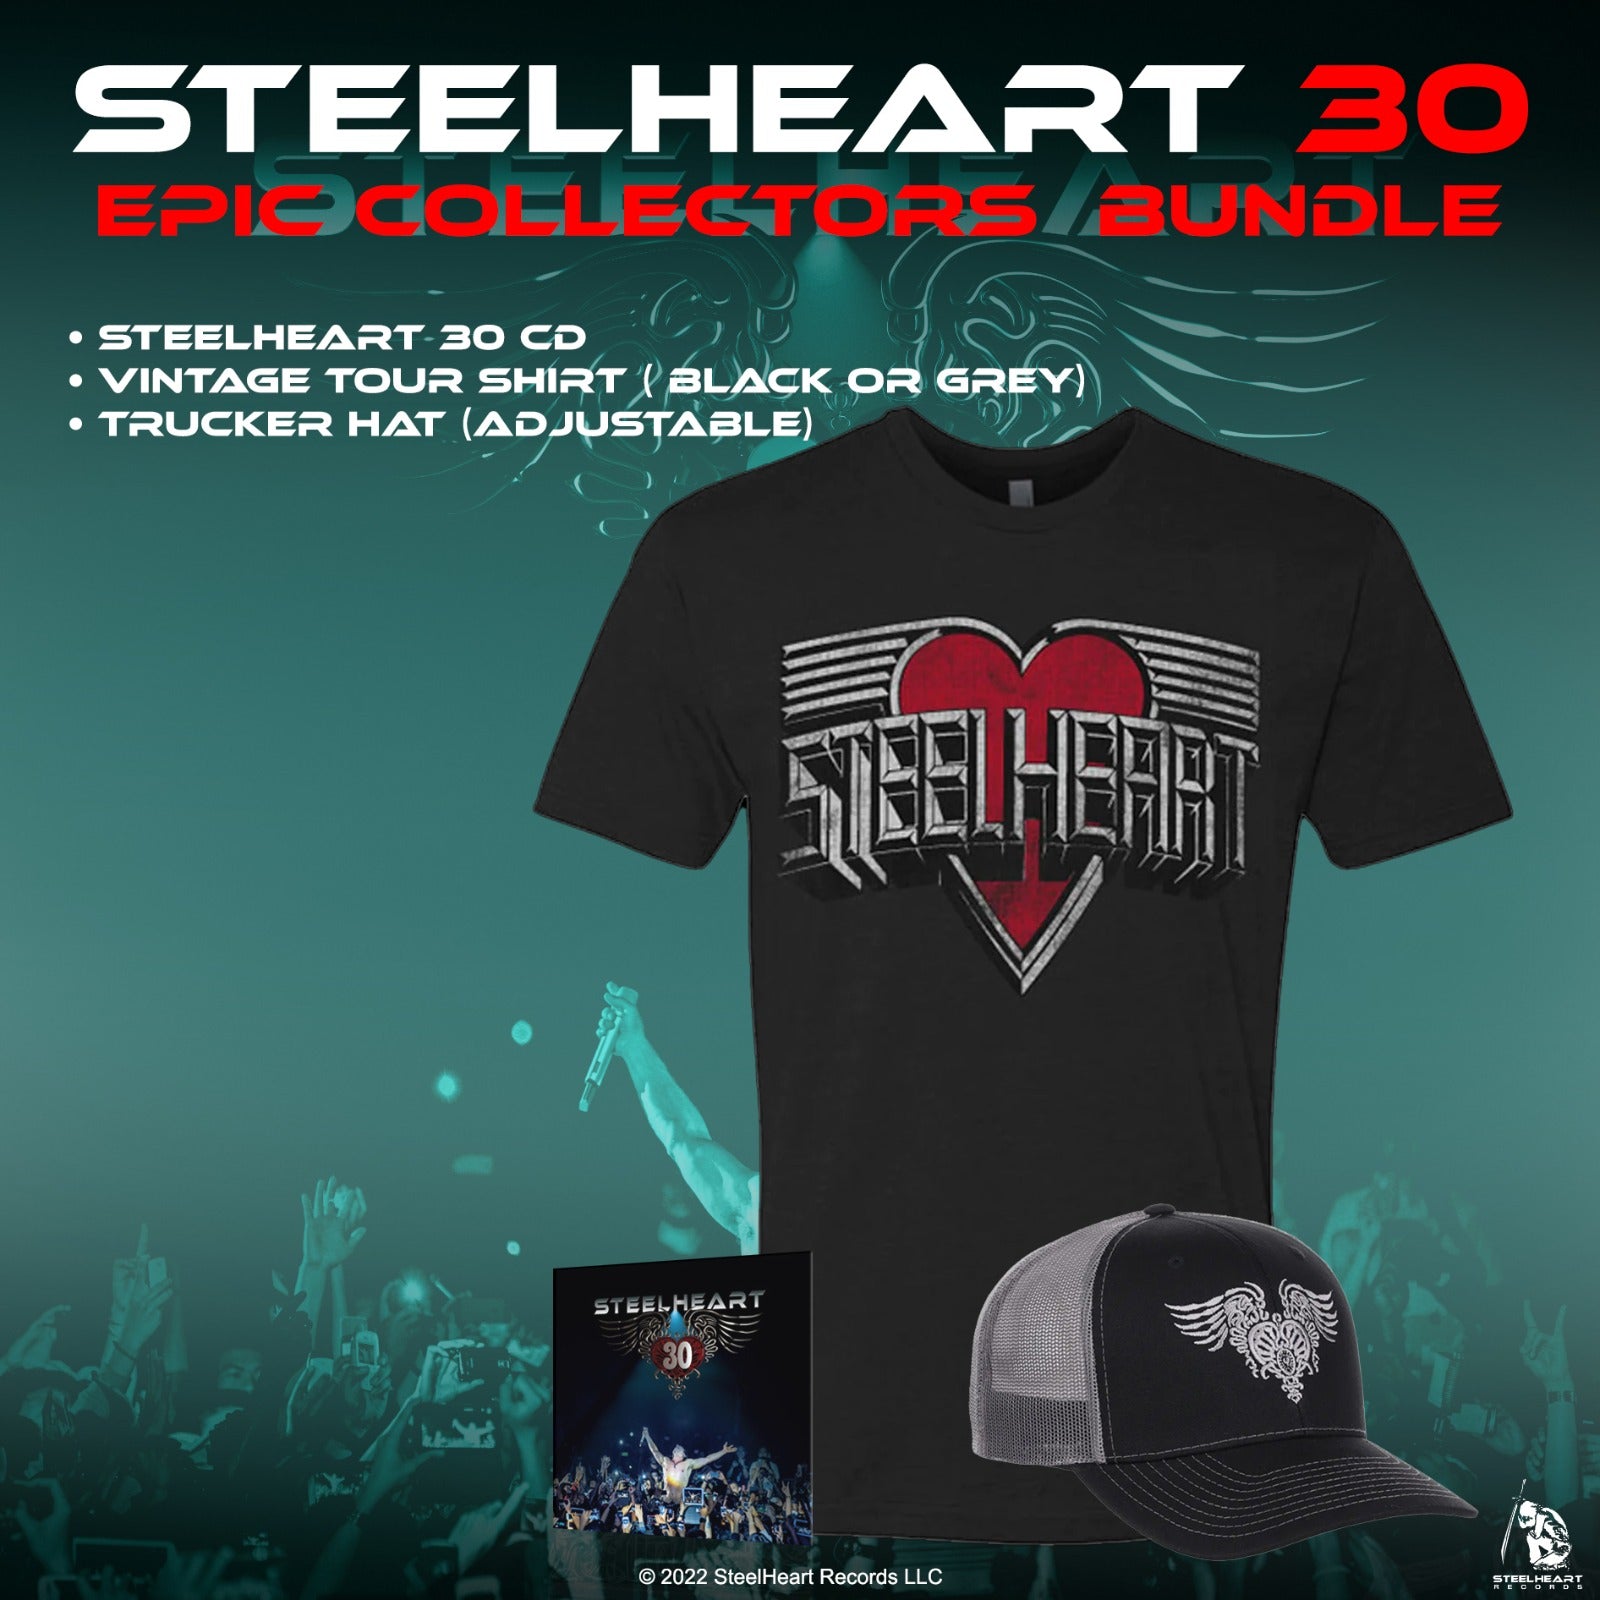 steelheart band tour 2023